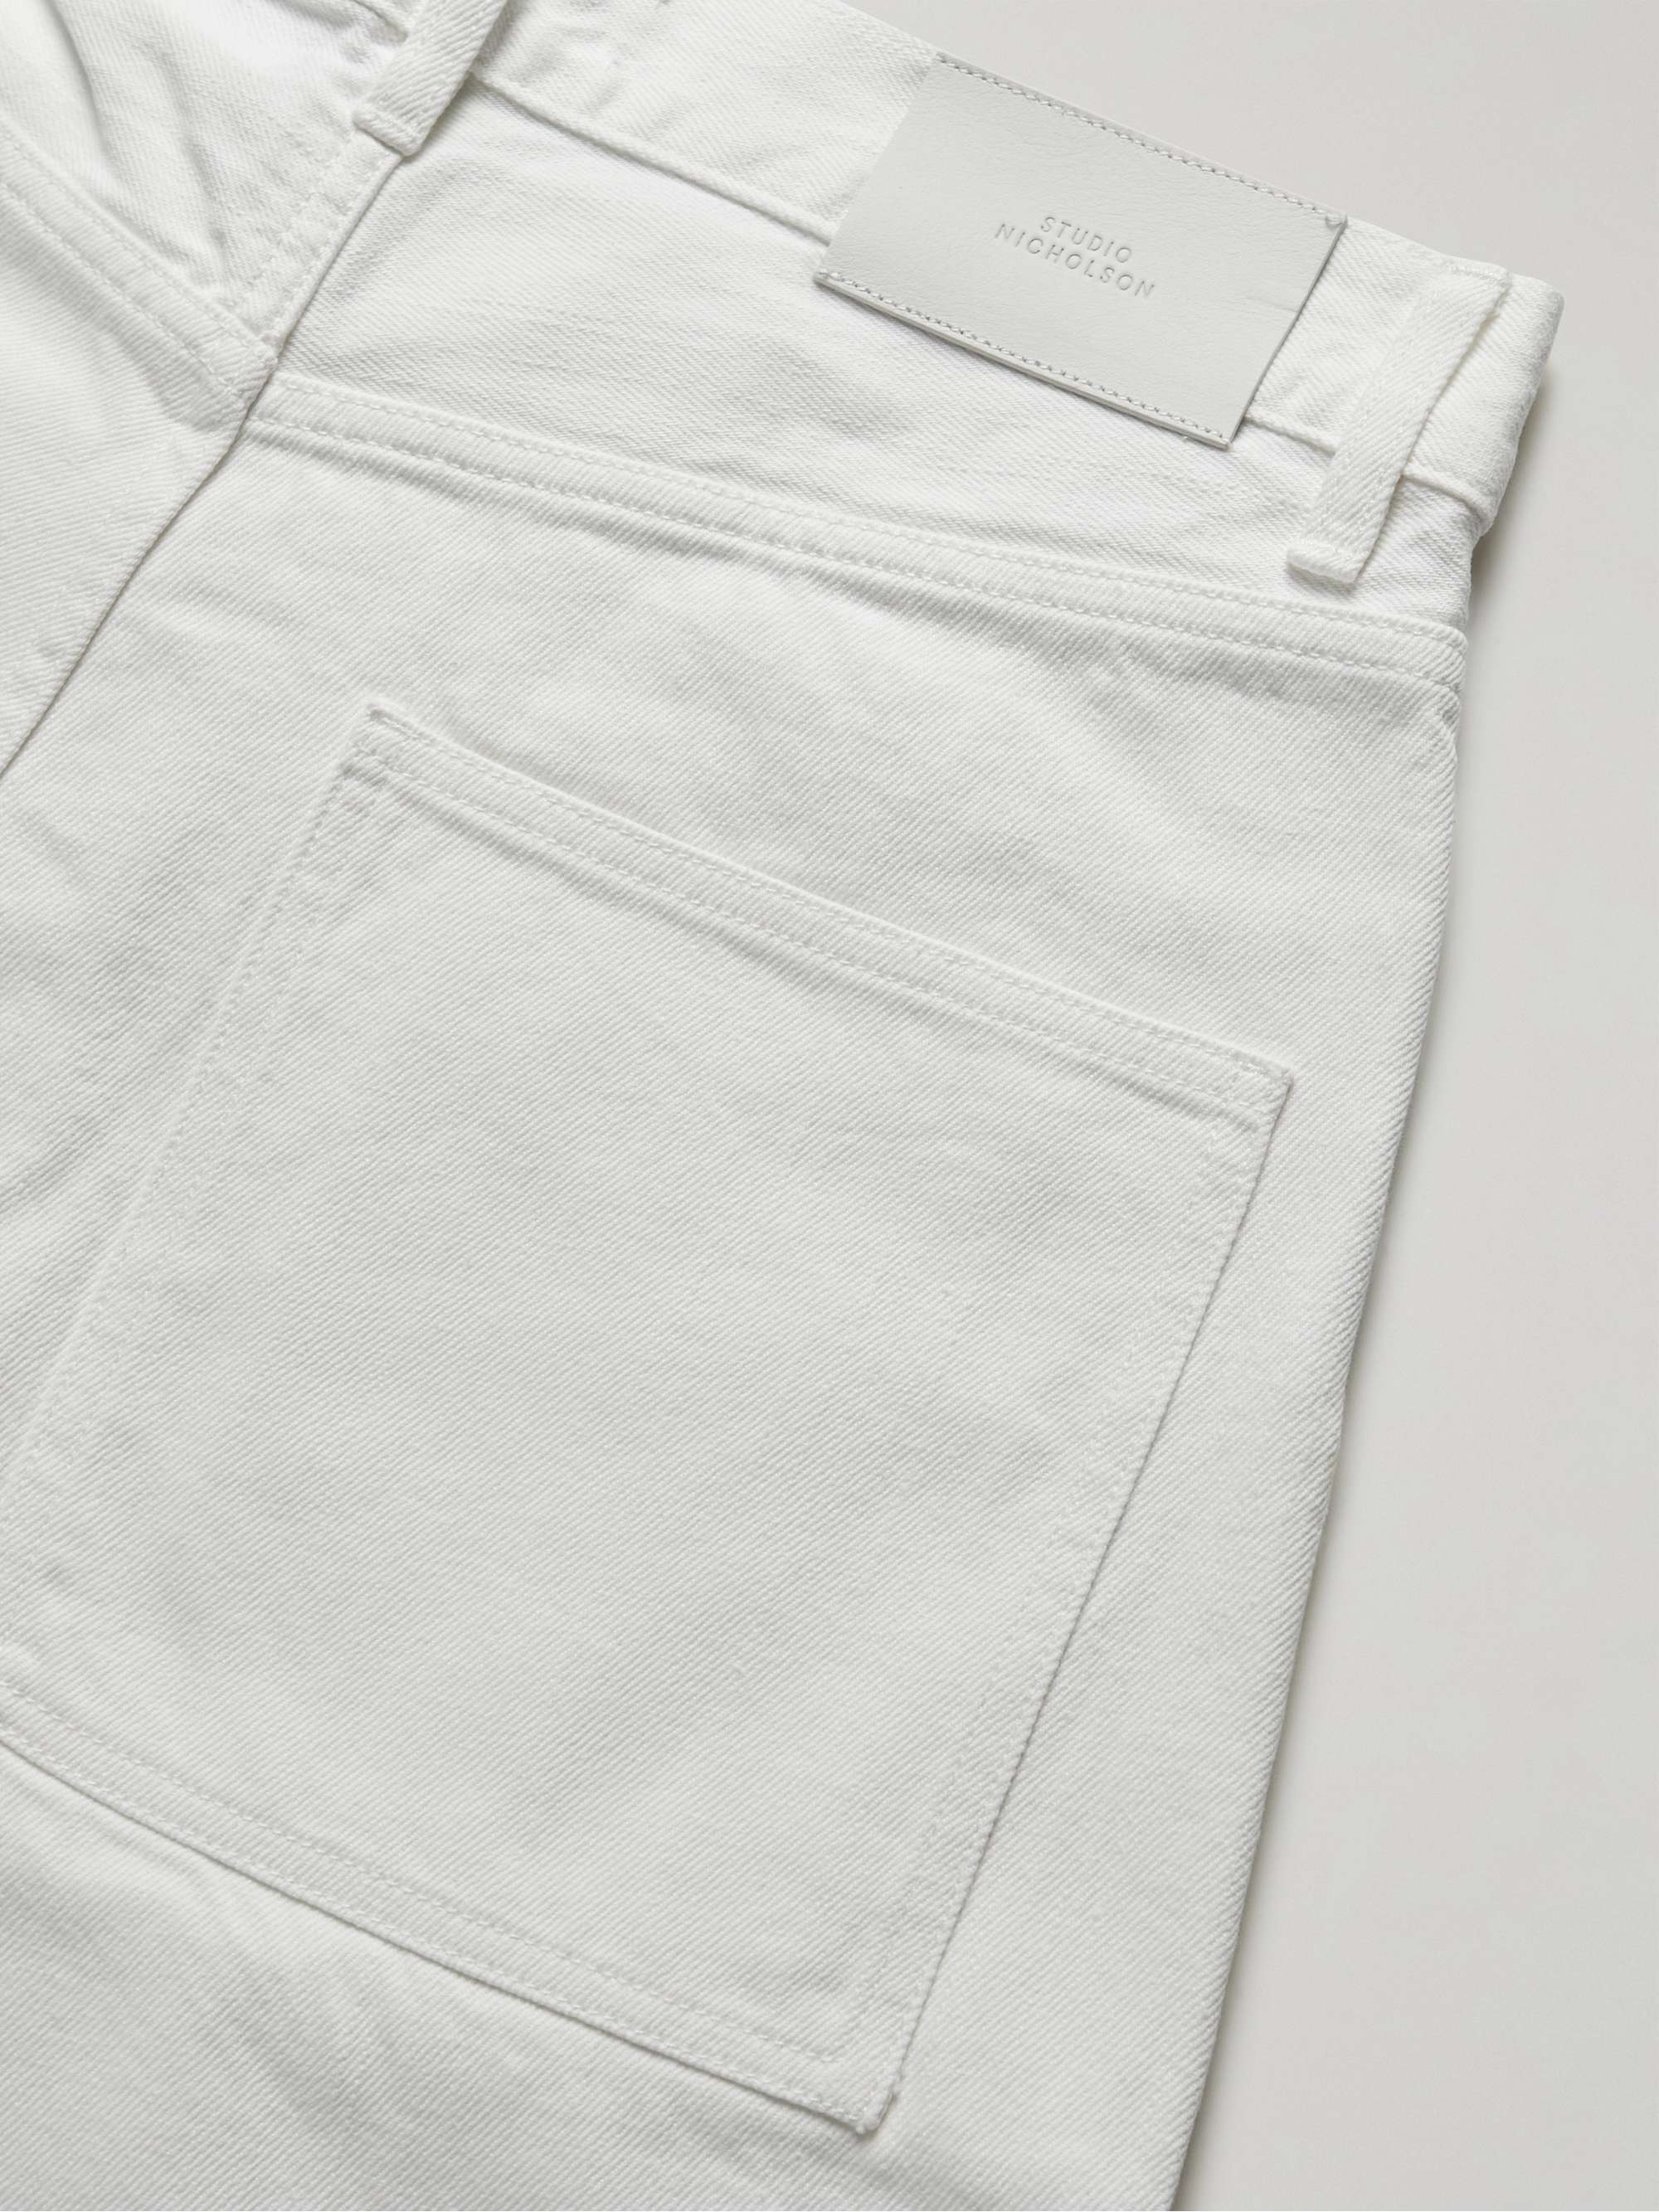 Mens Clothing Jeans Tapered jeans Studio Nicholson Denim Tannaro Tapered-leg Jeans in White for Men 